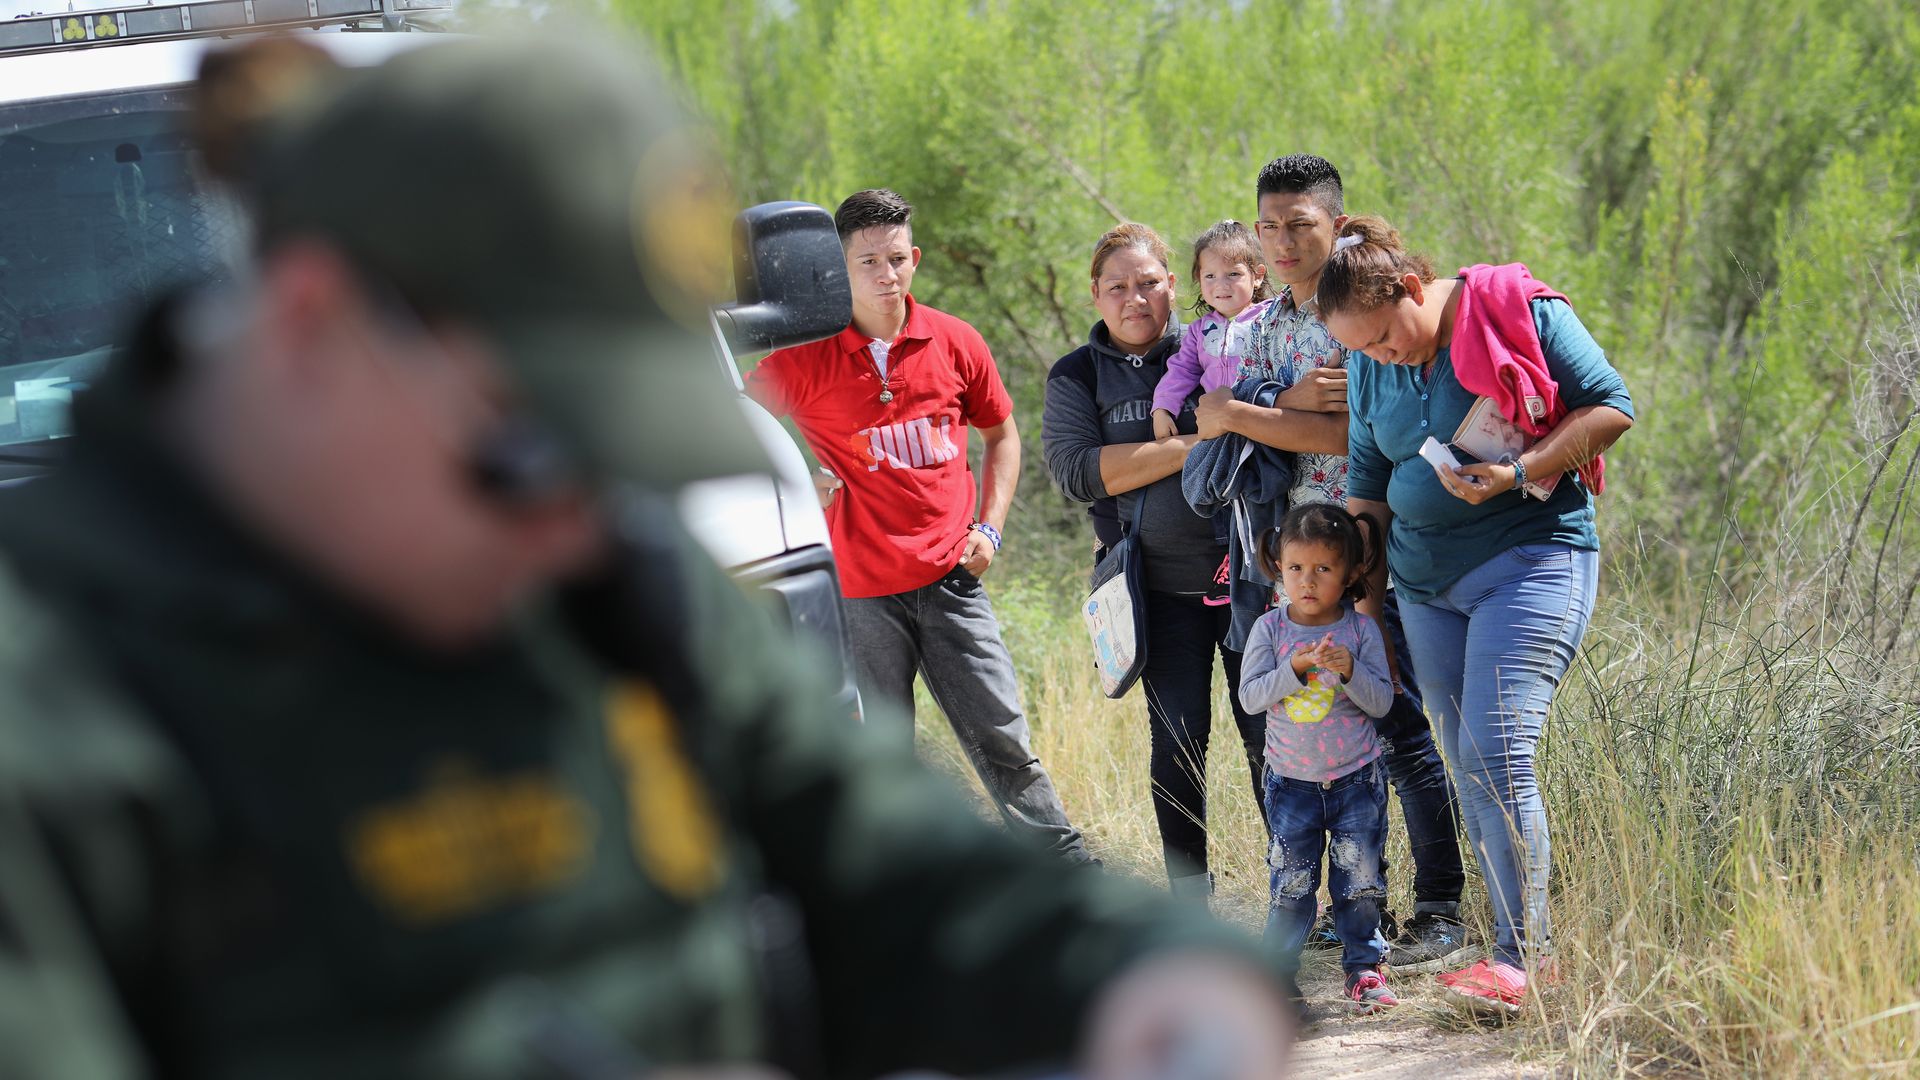 Central American asylum seekers wait as U.S. Border Patrol agents take groups of them into custody near McAllen, Texas last week. Photo: John Moore/Getty Images